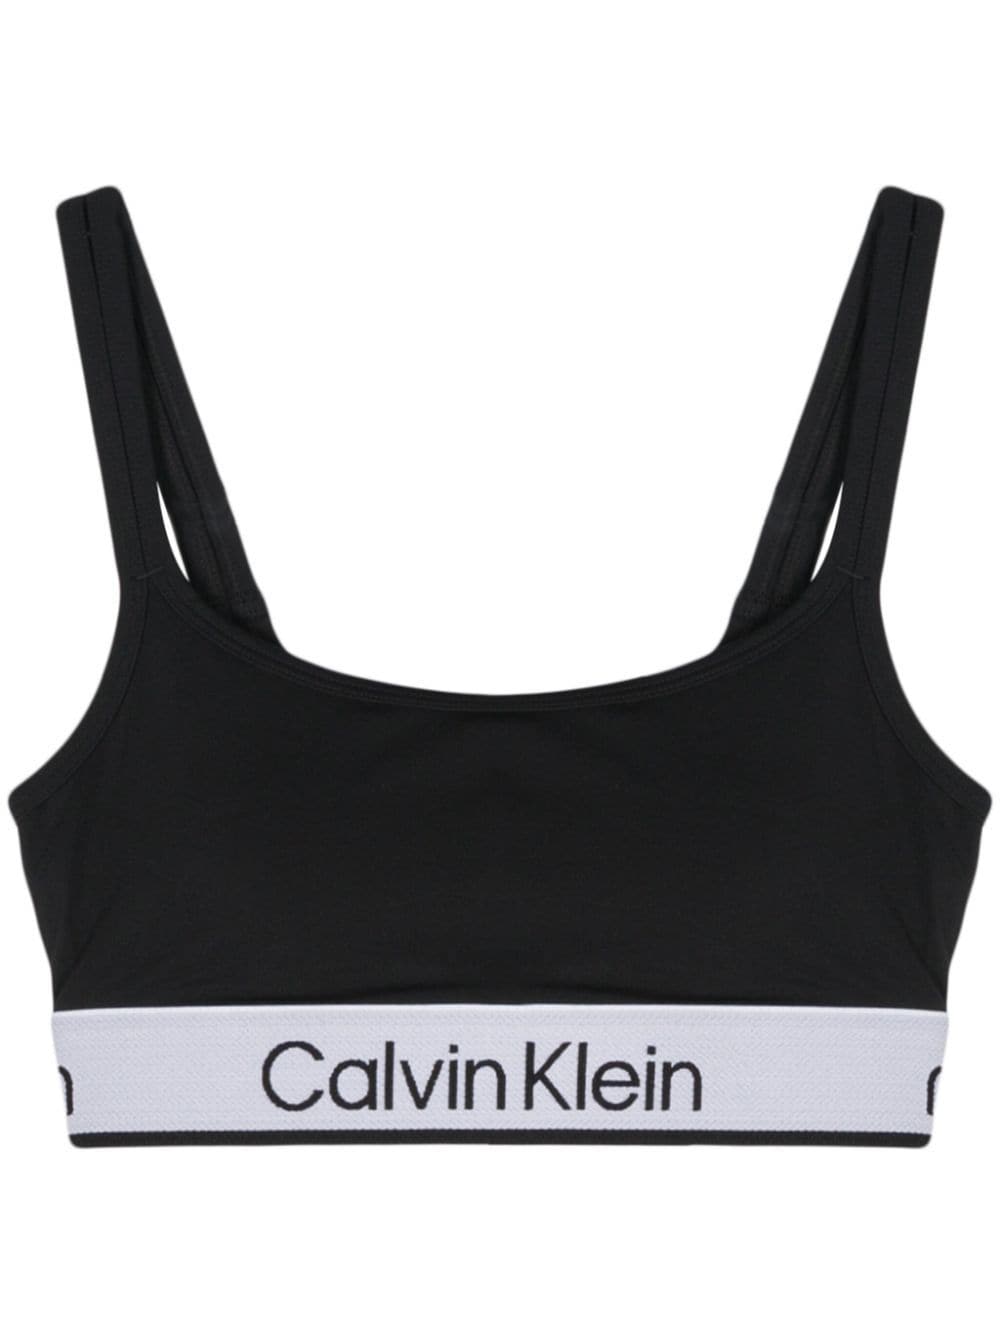 Low Impact sports bra, Calvin Klein